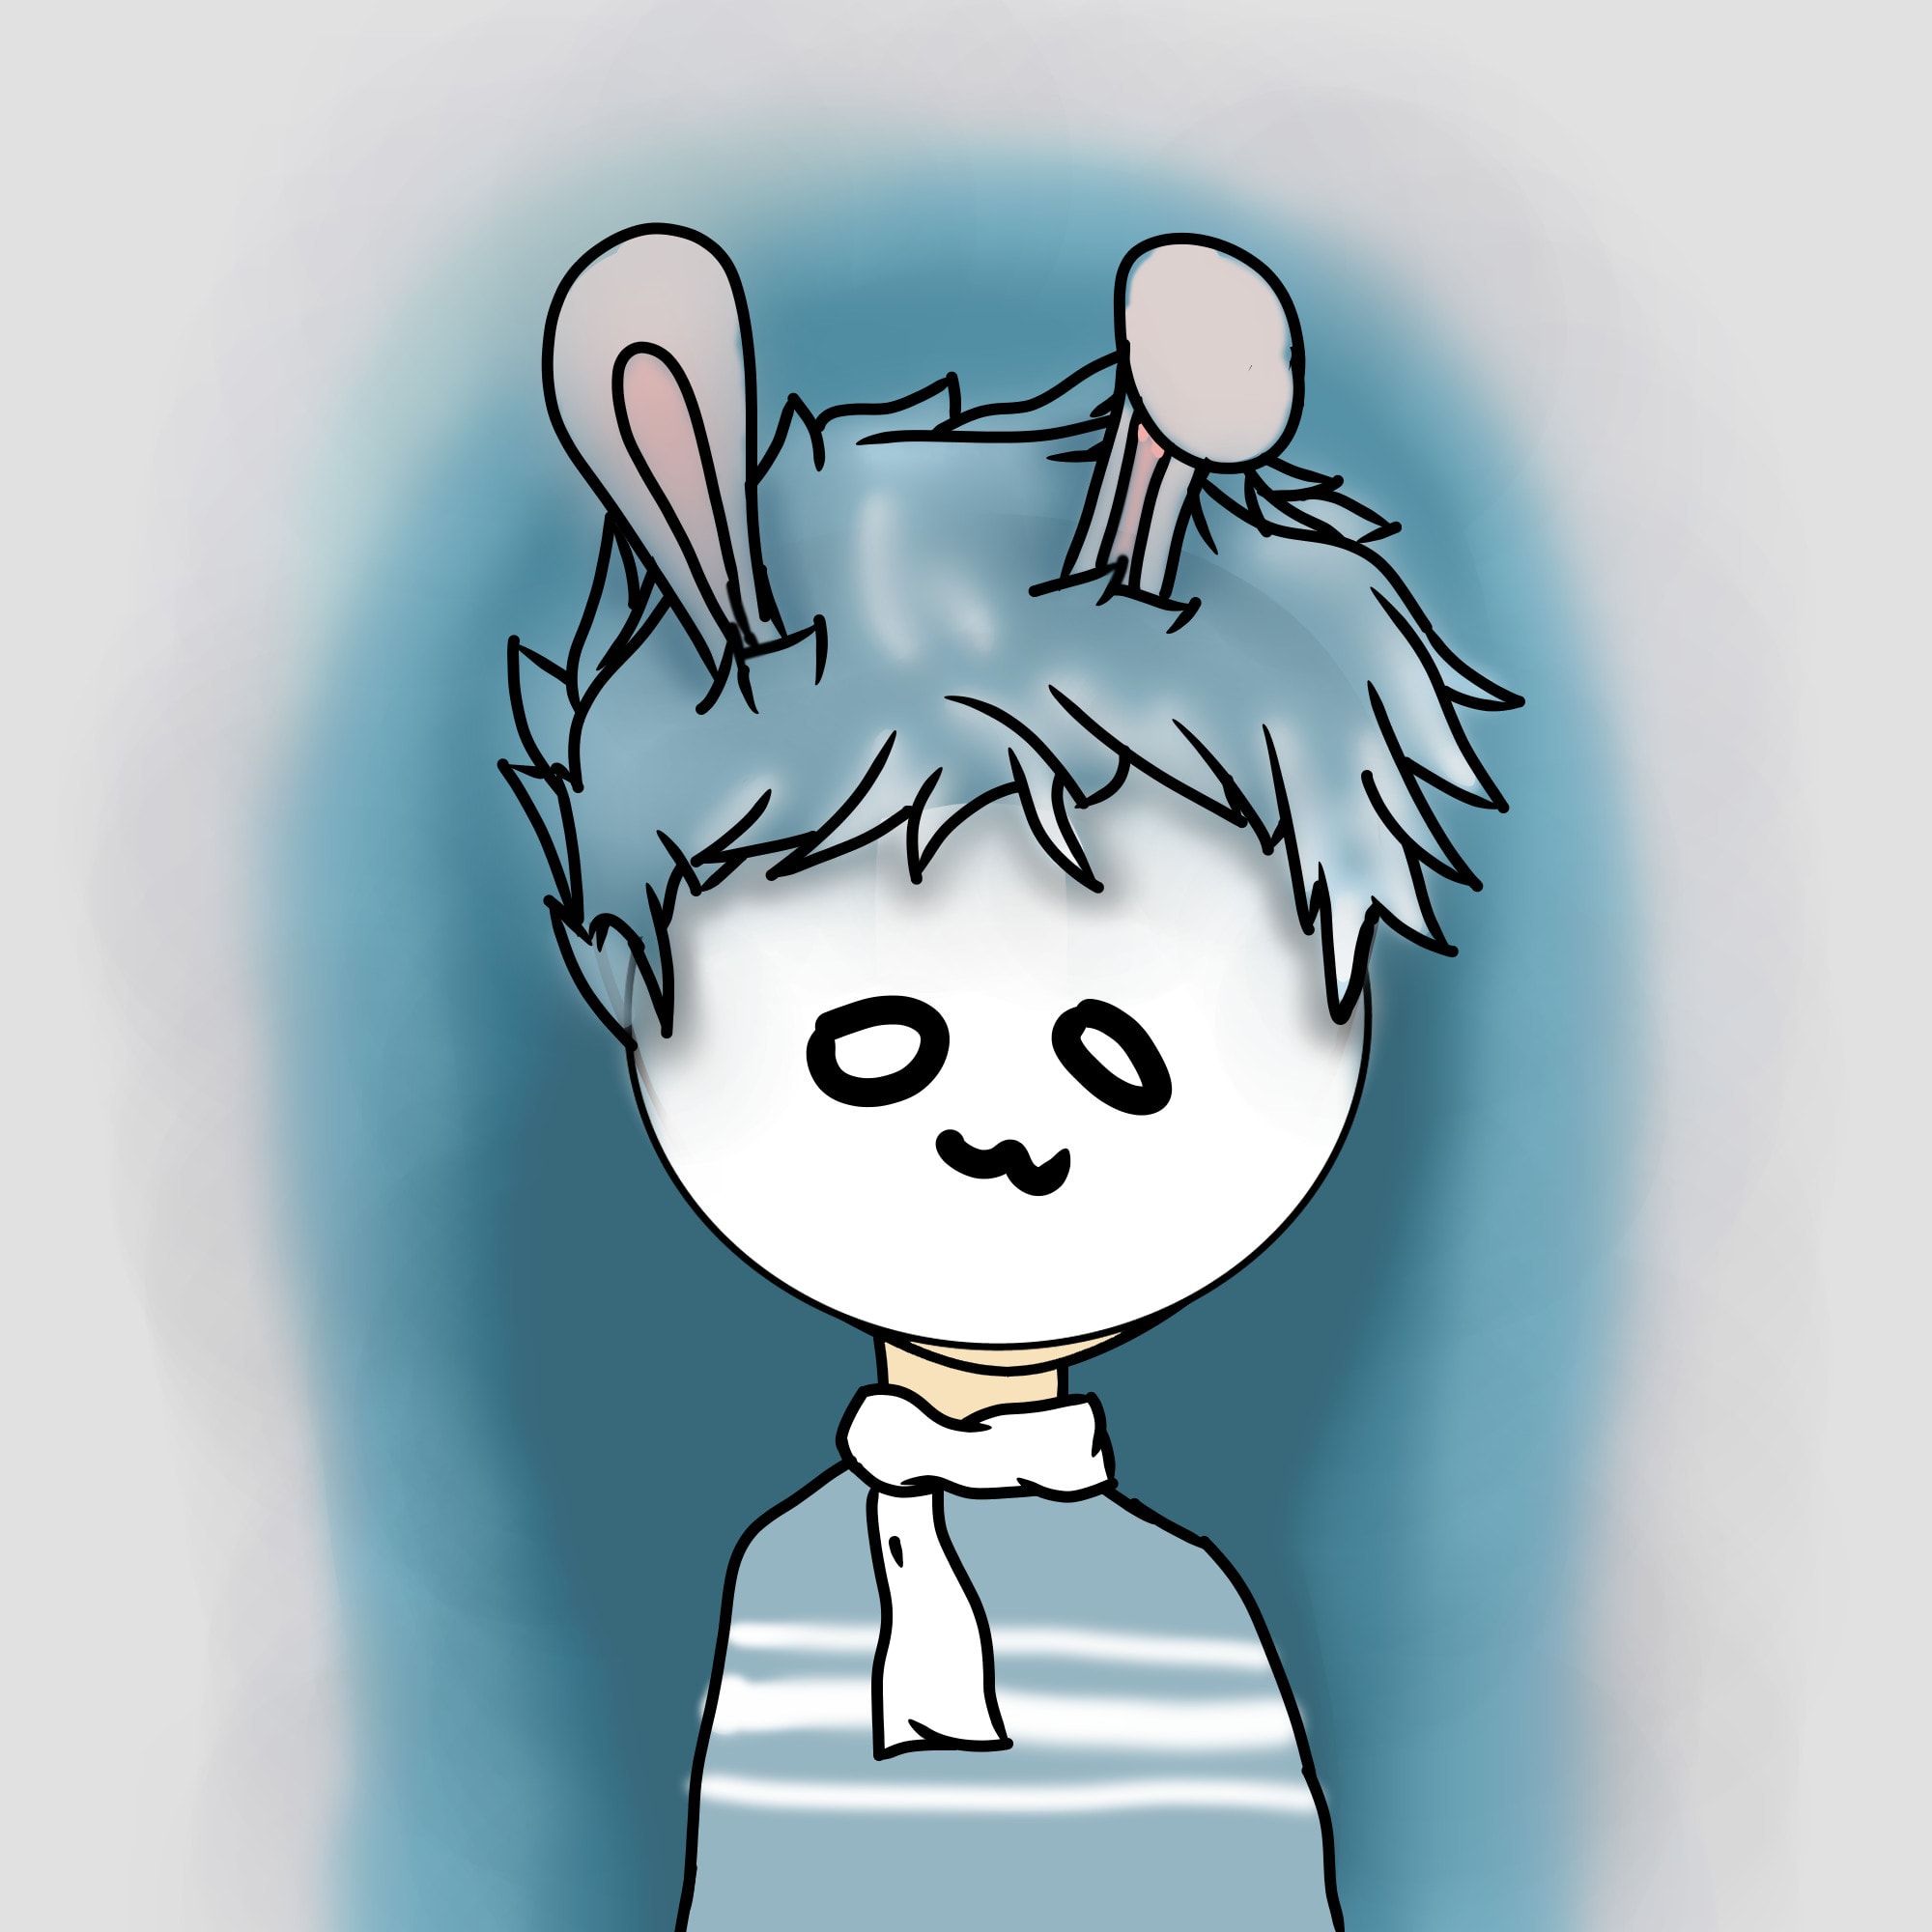 Draw Your Roblox Avatar Into A Profile Picture By Stilkko - roblox avatar profile